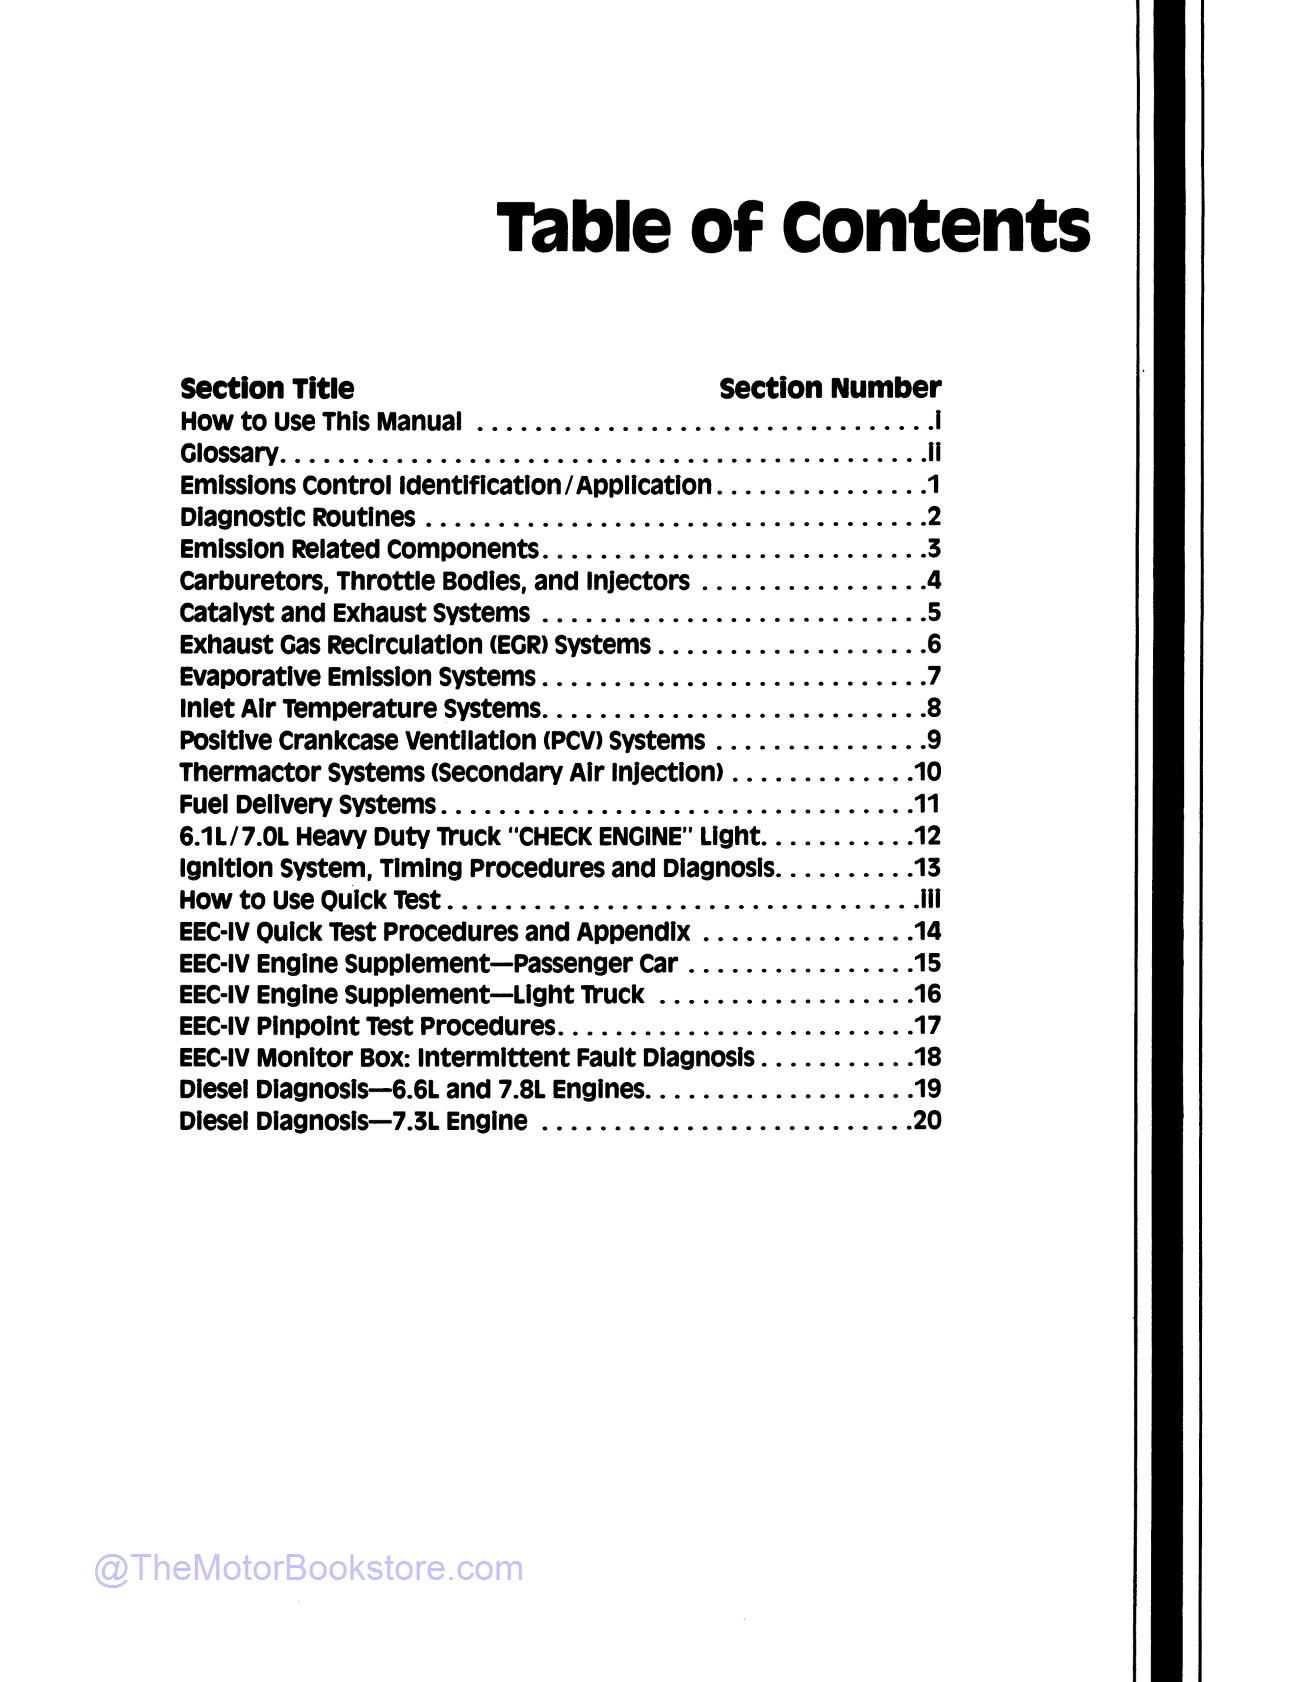 1990 Ford Engine / Emissions Diagnosis Shop Manual - Cars & Trucks